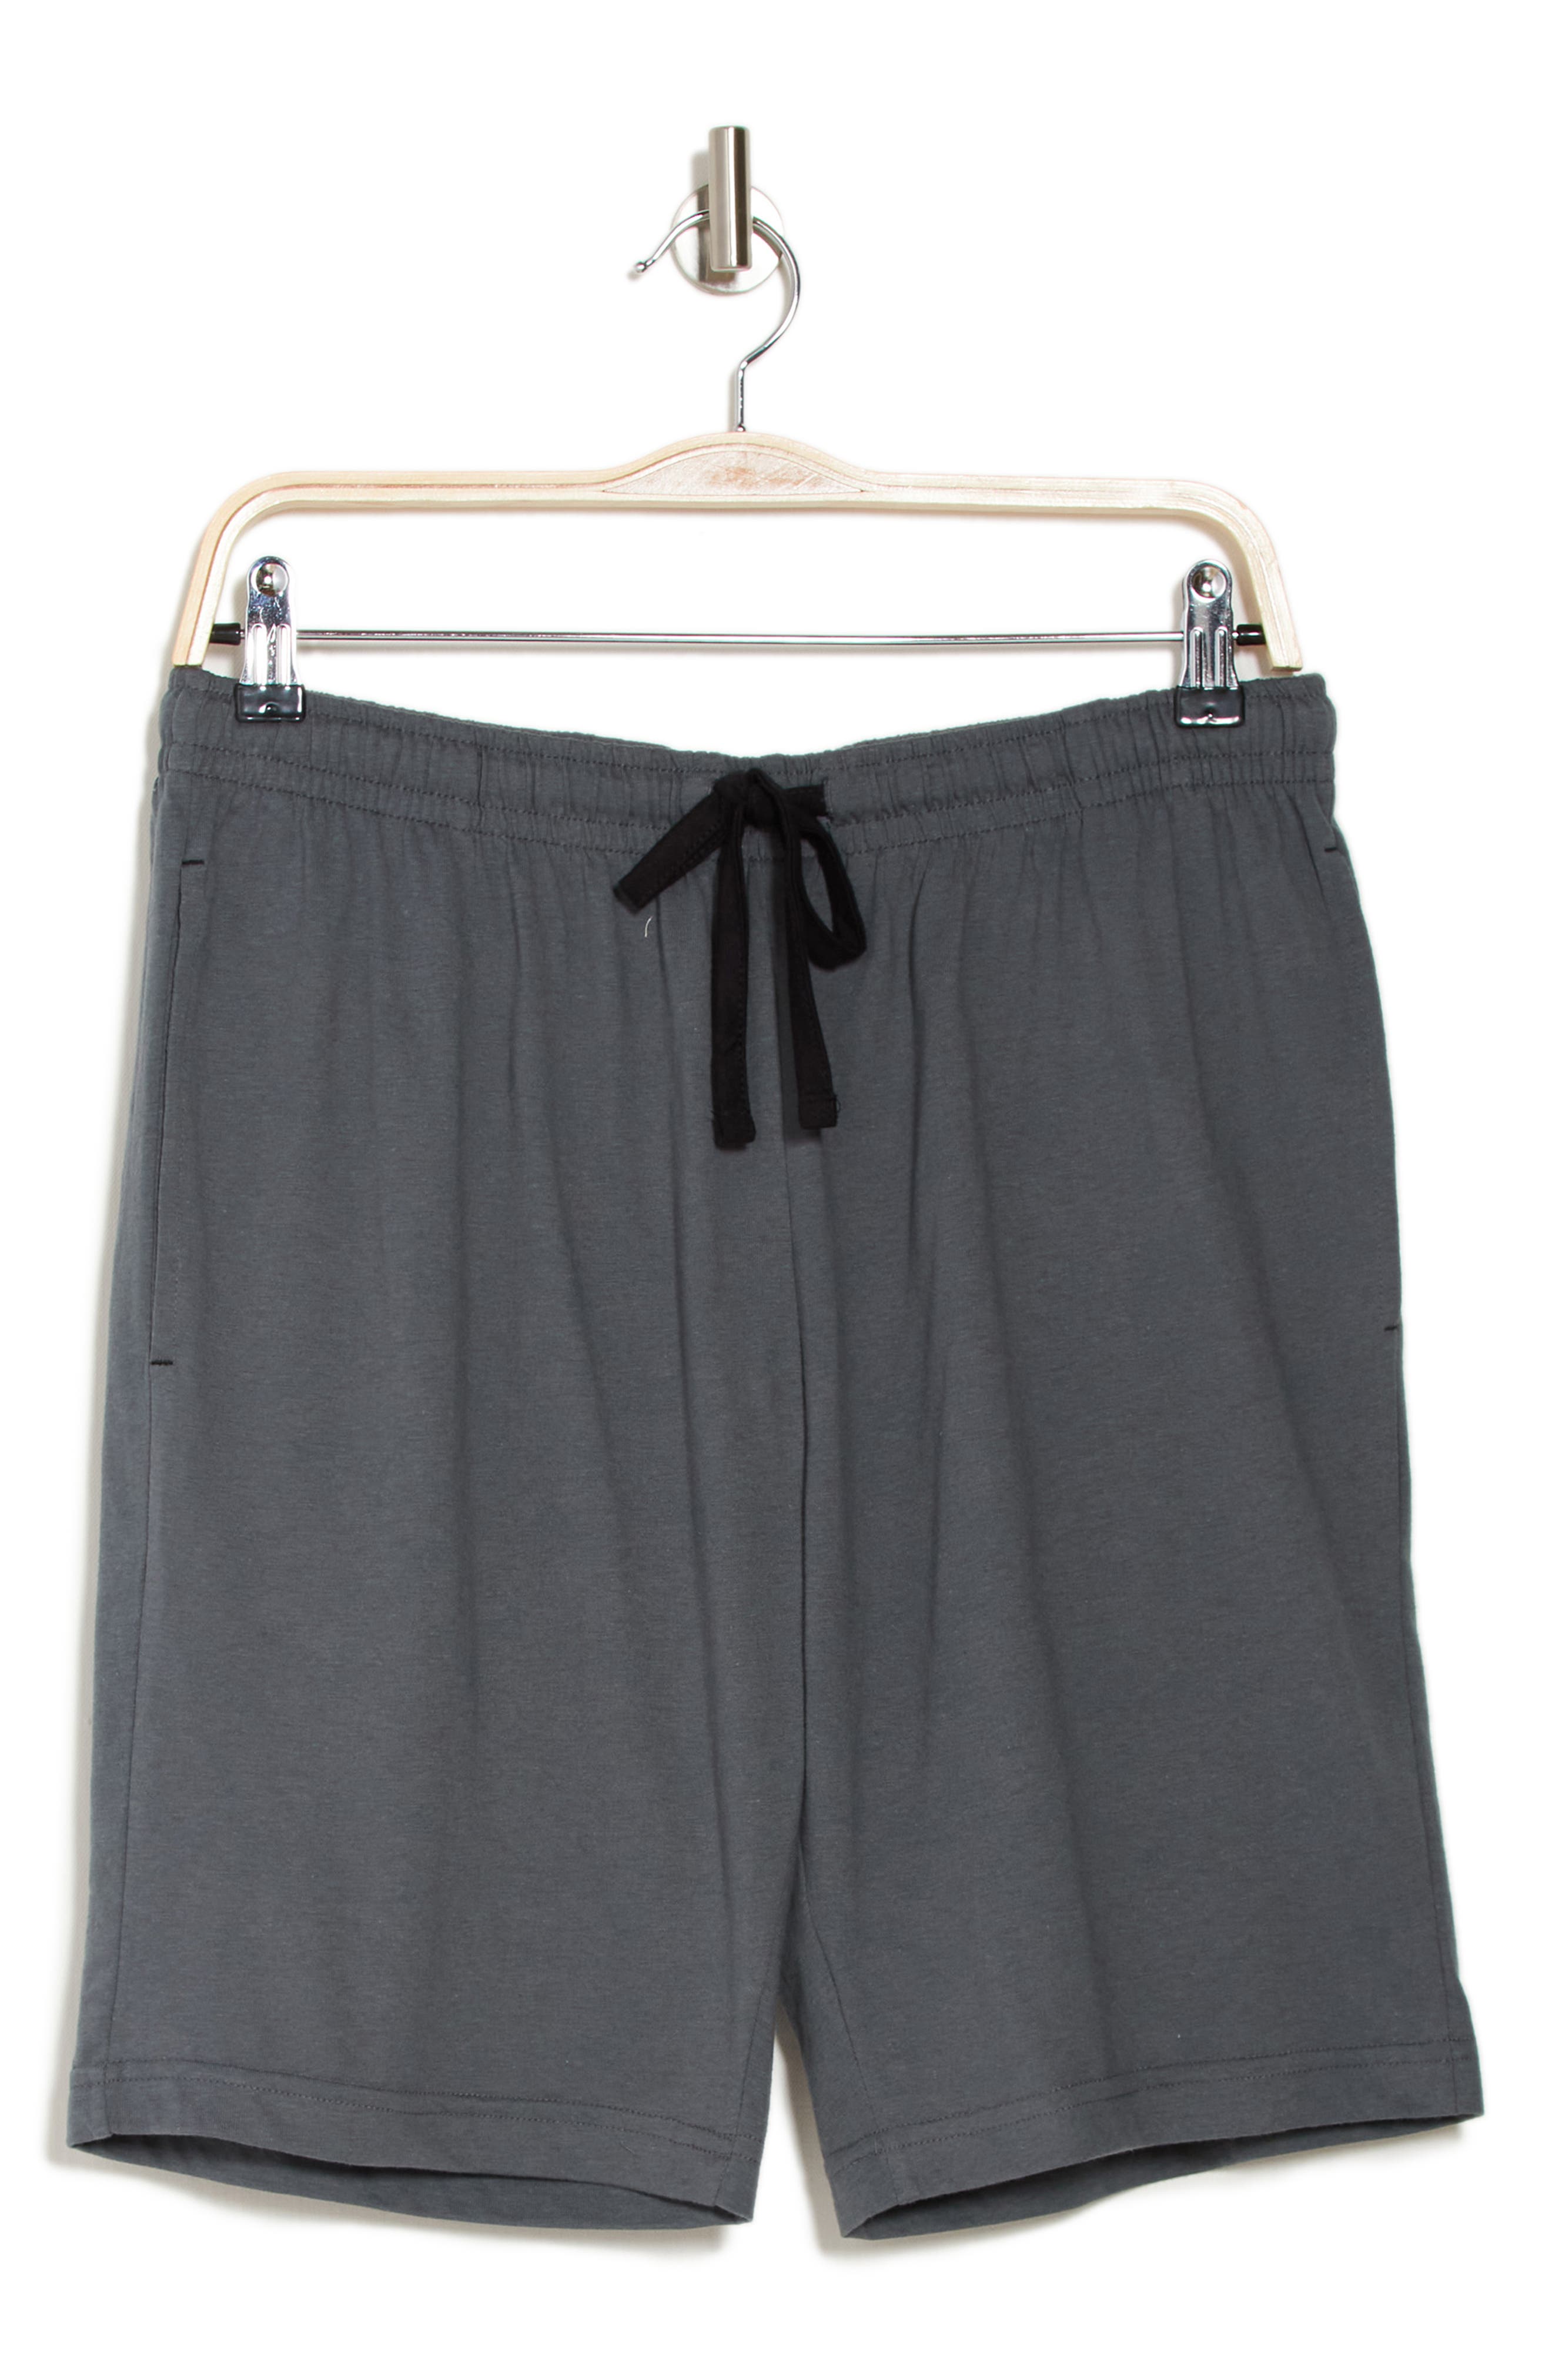 Mister Jersey Lounge Shorts In Medium Grey3